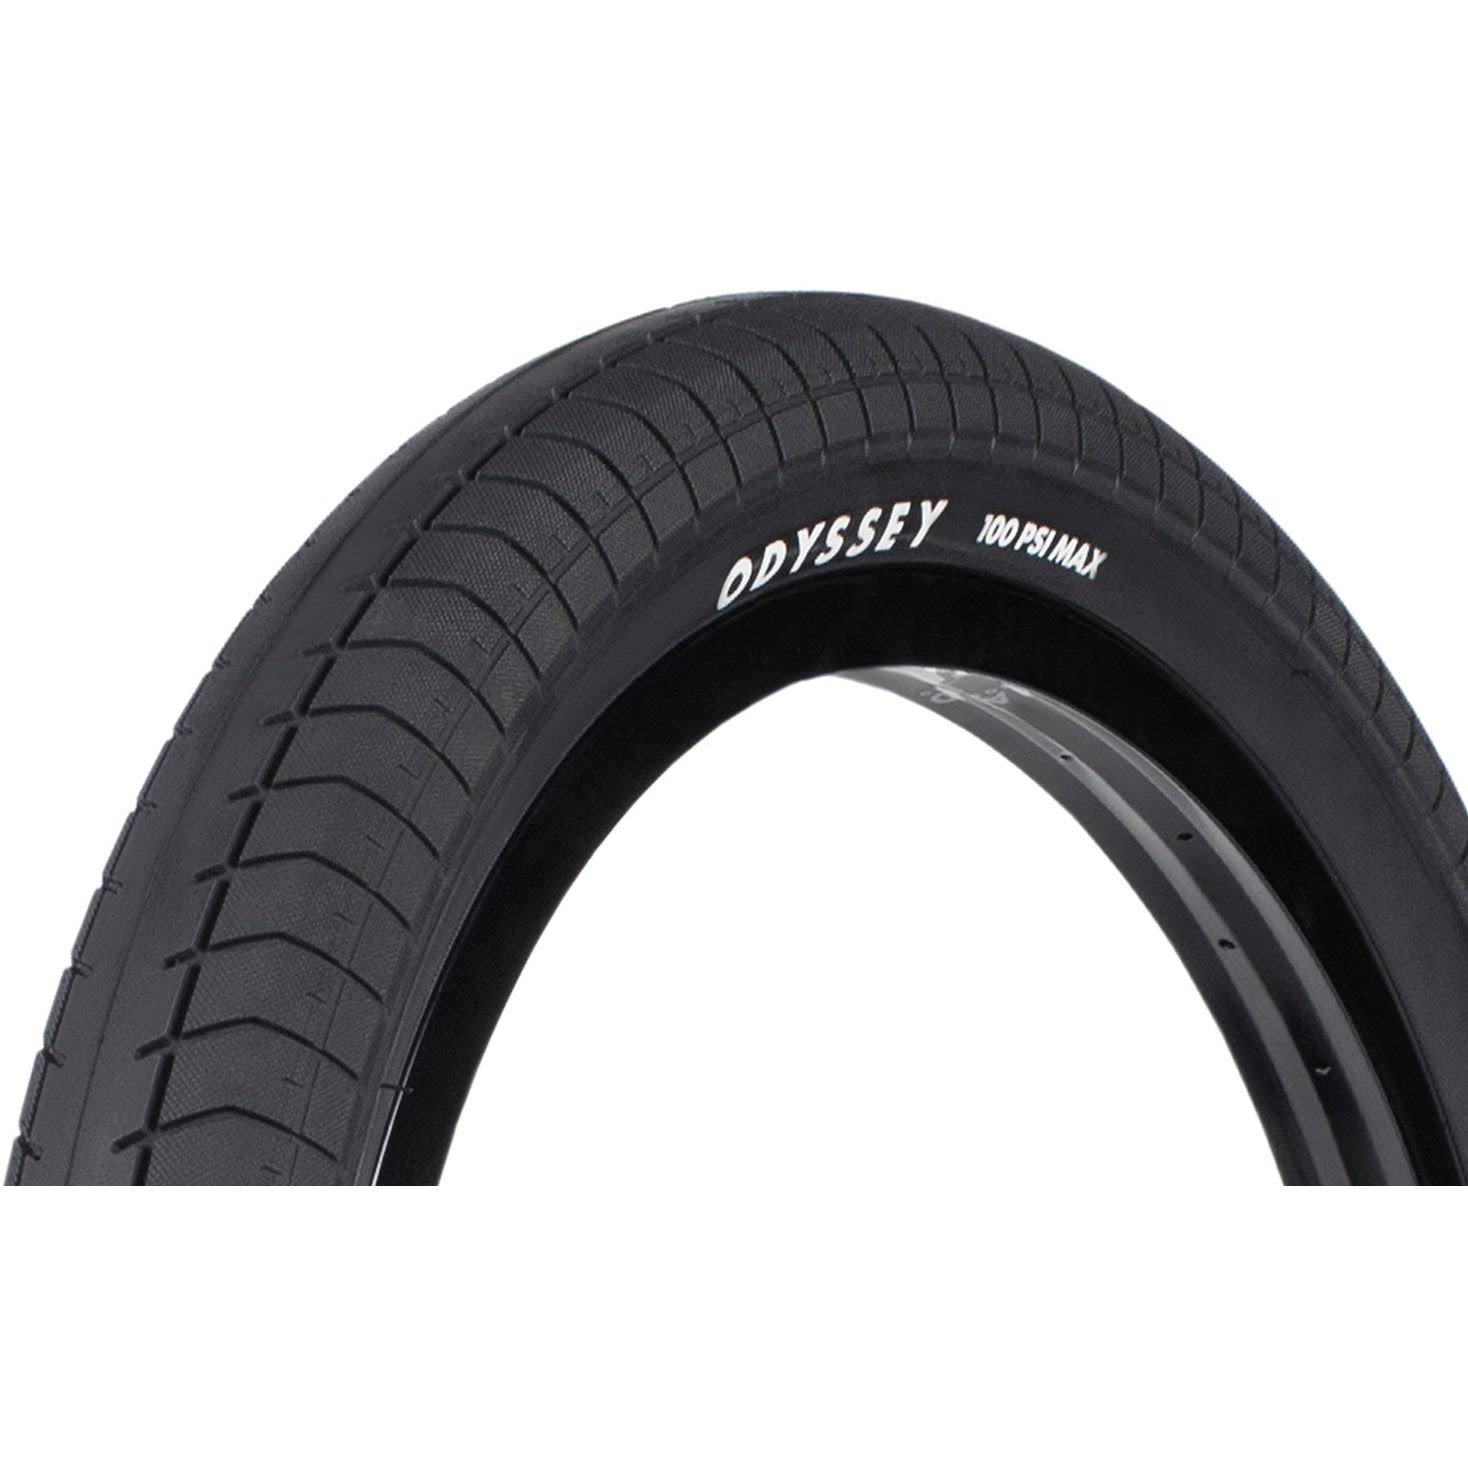 Odyssey Path Pro Tire - Black, 20in x 2.25in